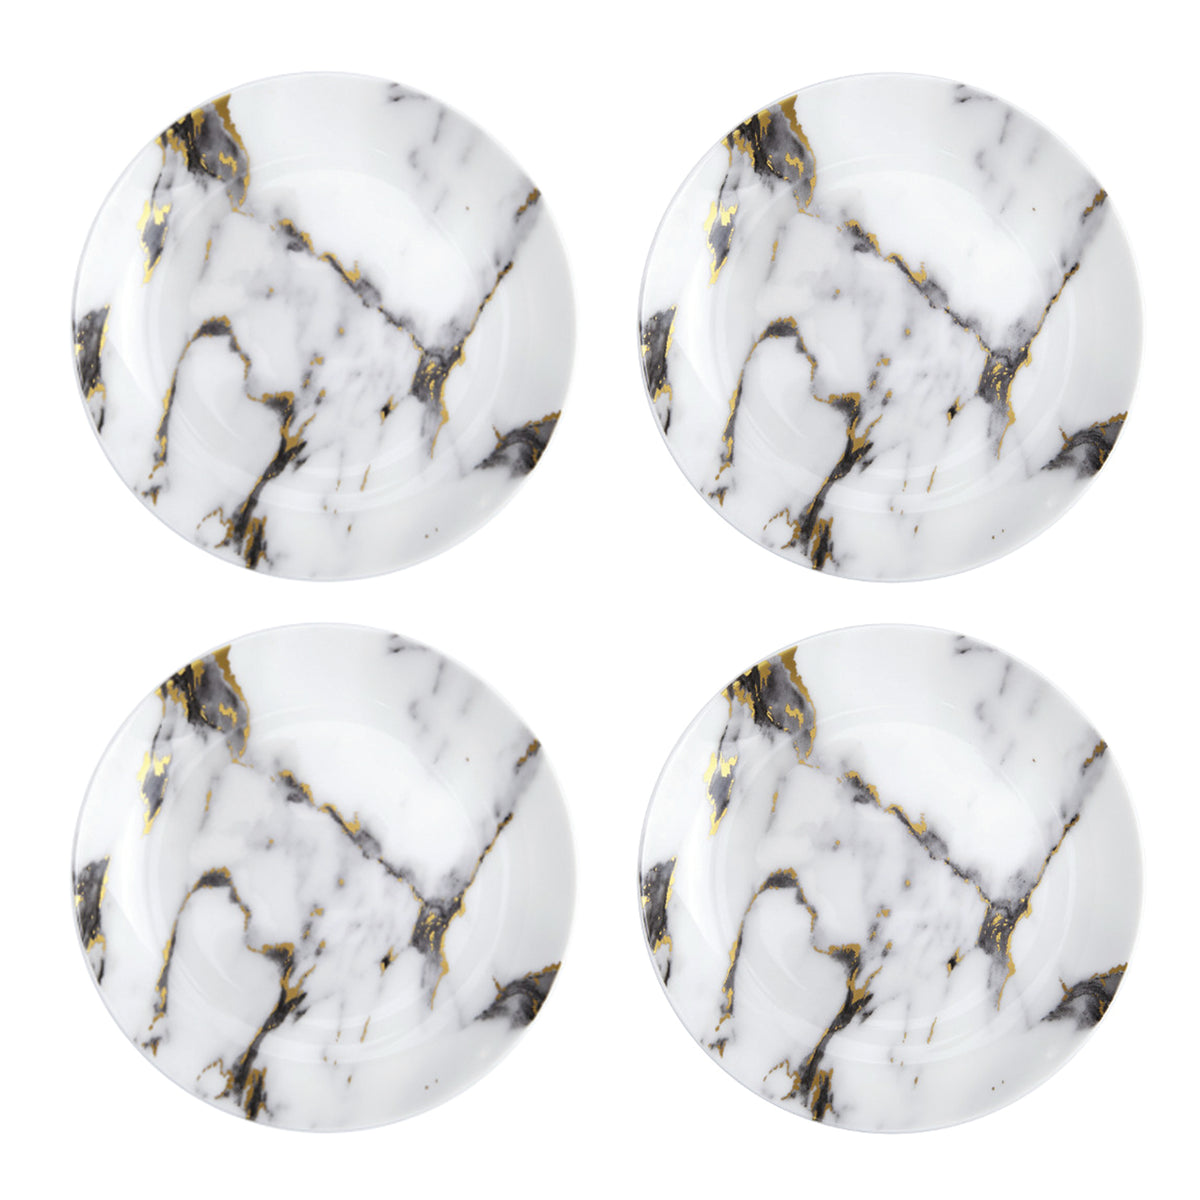 Prouna Marble Venice Fog Set of 4 Canapé Plates White Background Photo